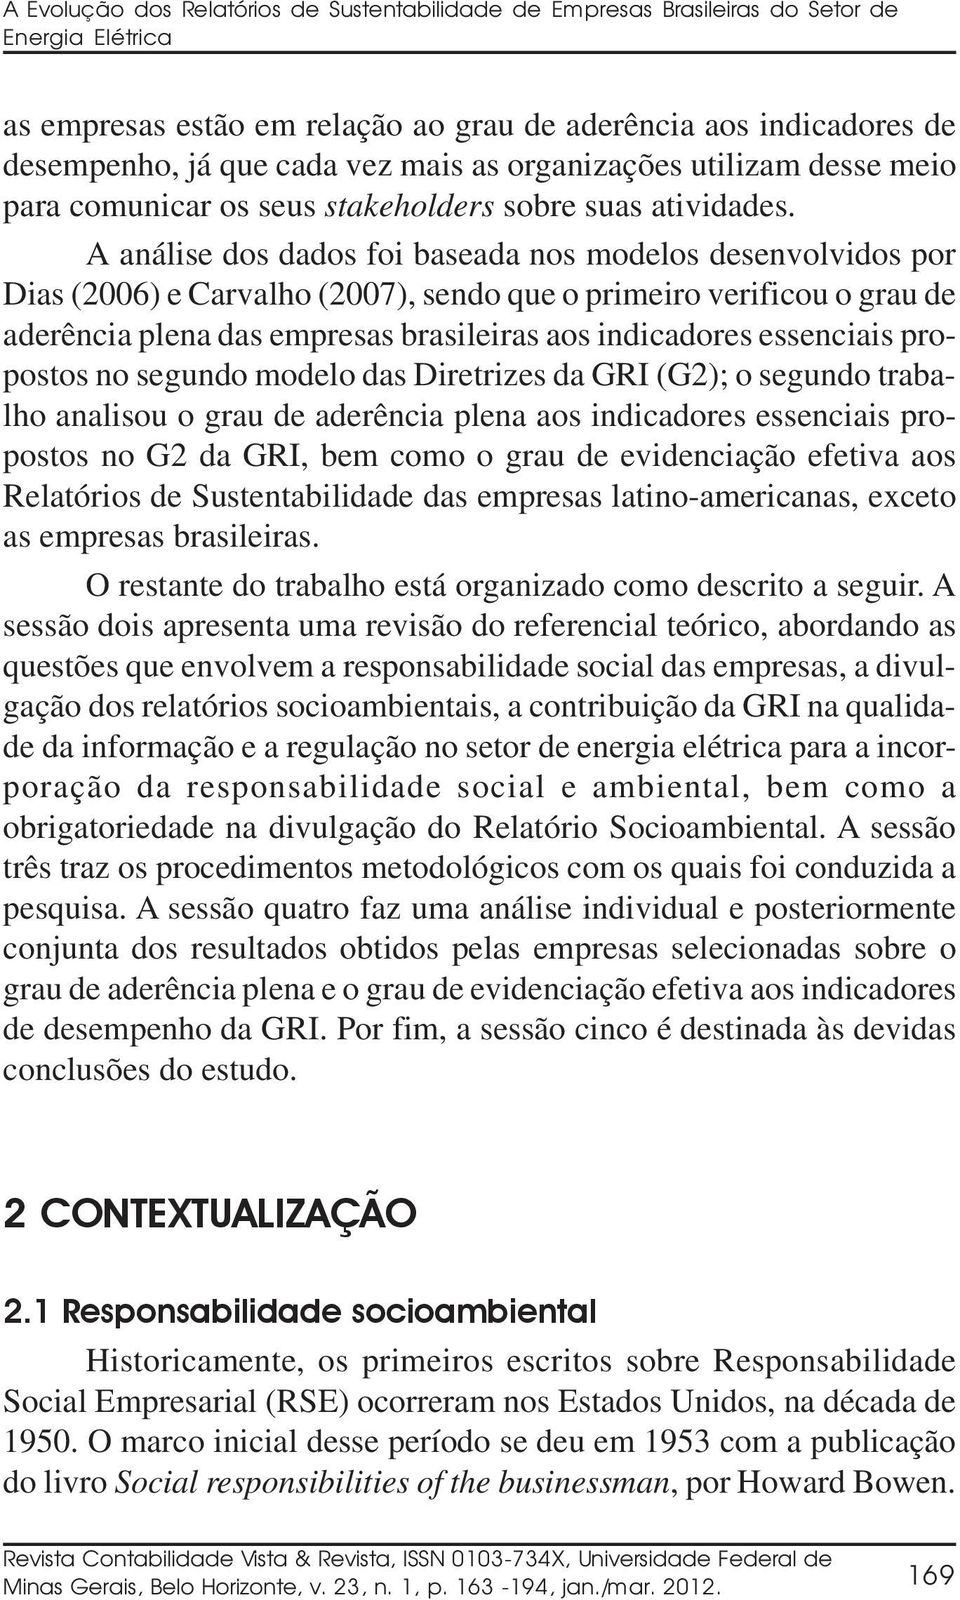 A análise dos dados foi baseada nos modelos desenvolvidos por Dias (2006) e Carvalho (2007), sendo que o primeiro verificou o grau de aderência plena das empresas brasileiras aos indicadores